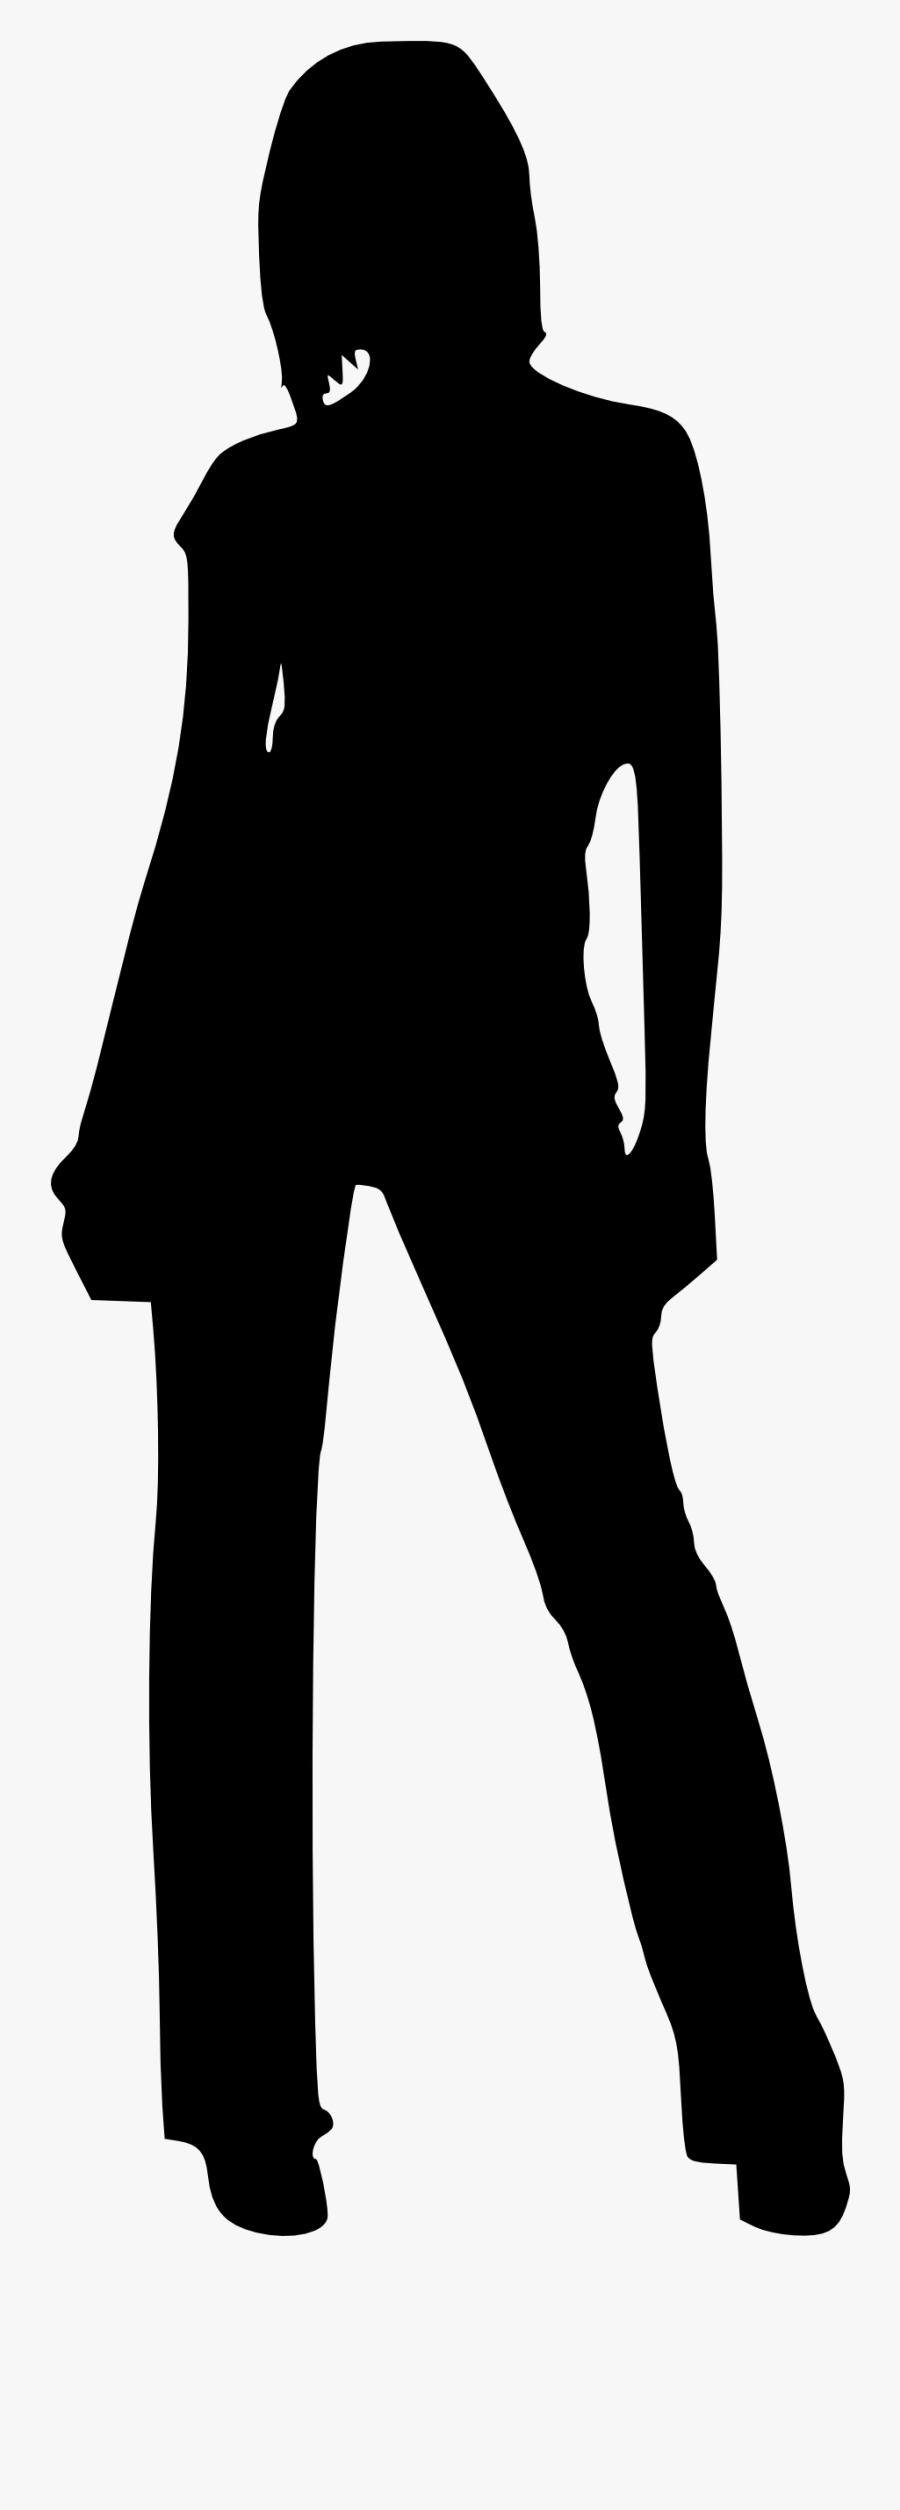 Free Woman Silhouette - Woman Silhouette Transparent Background, Transparent Clipart